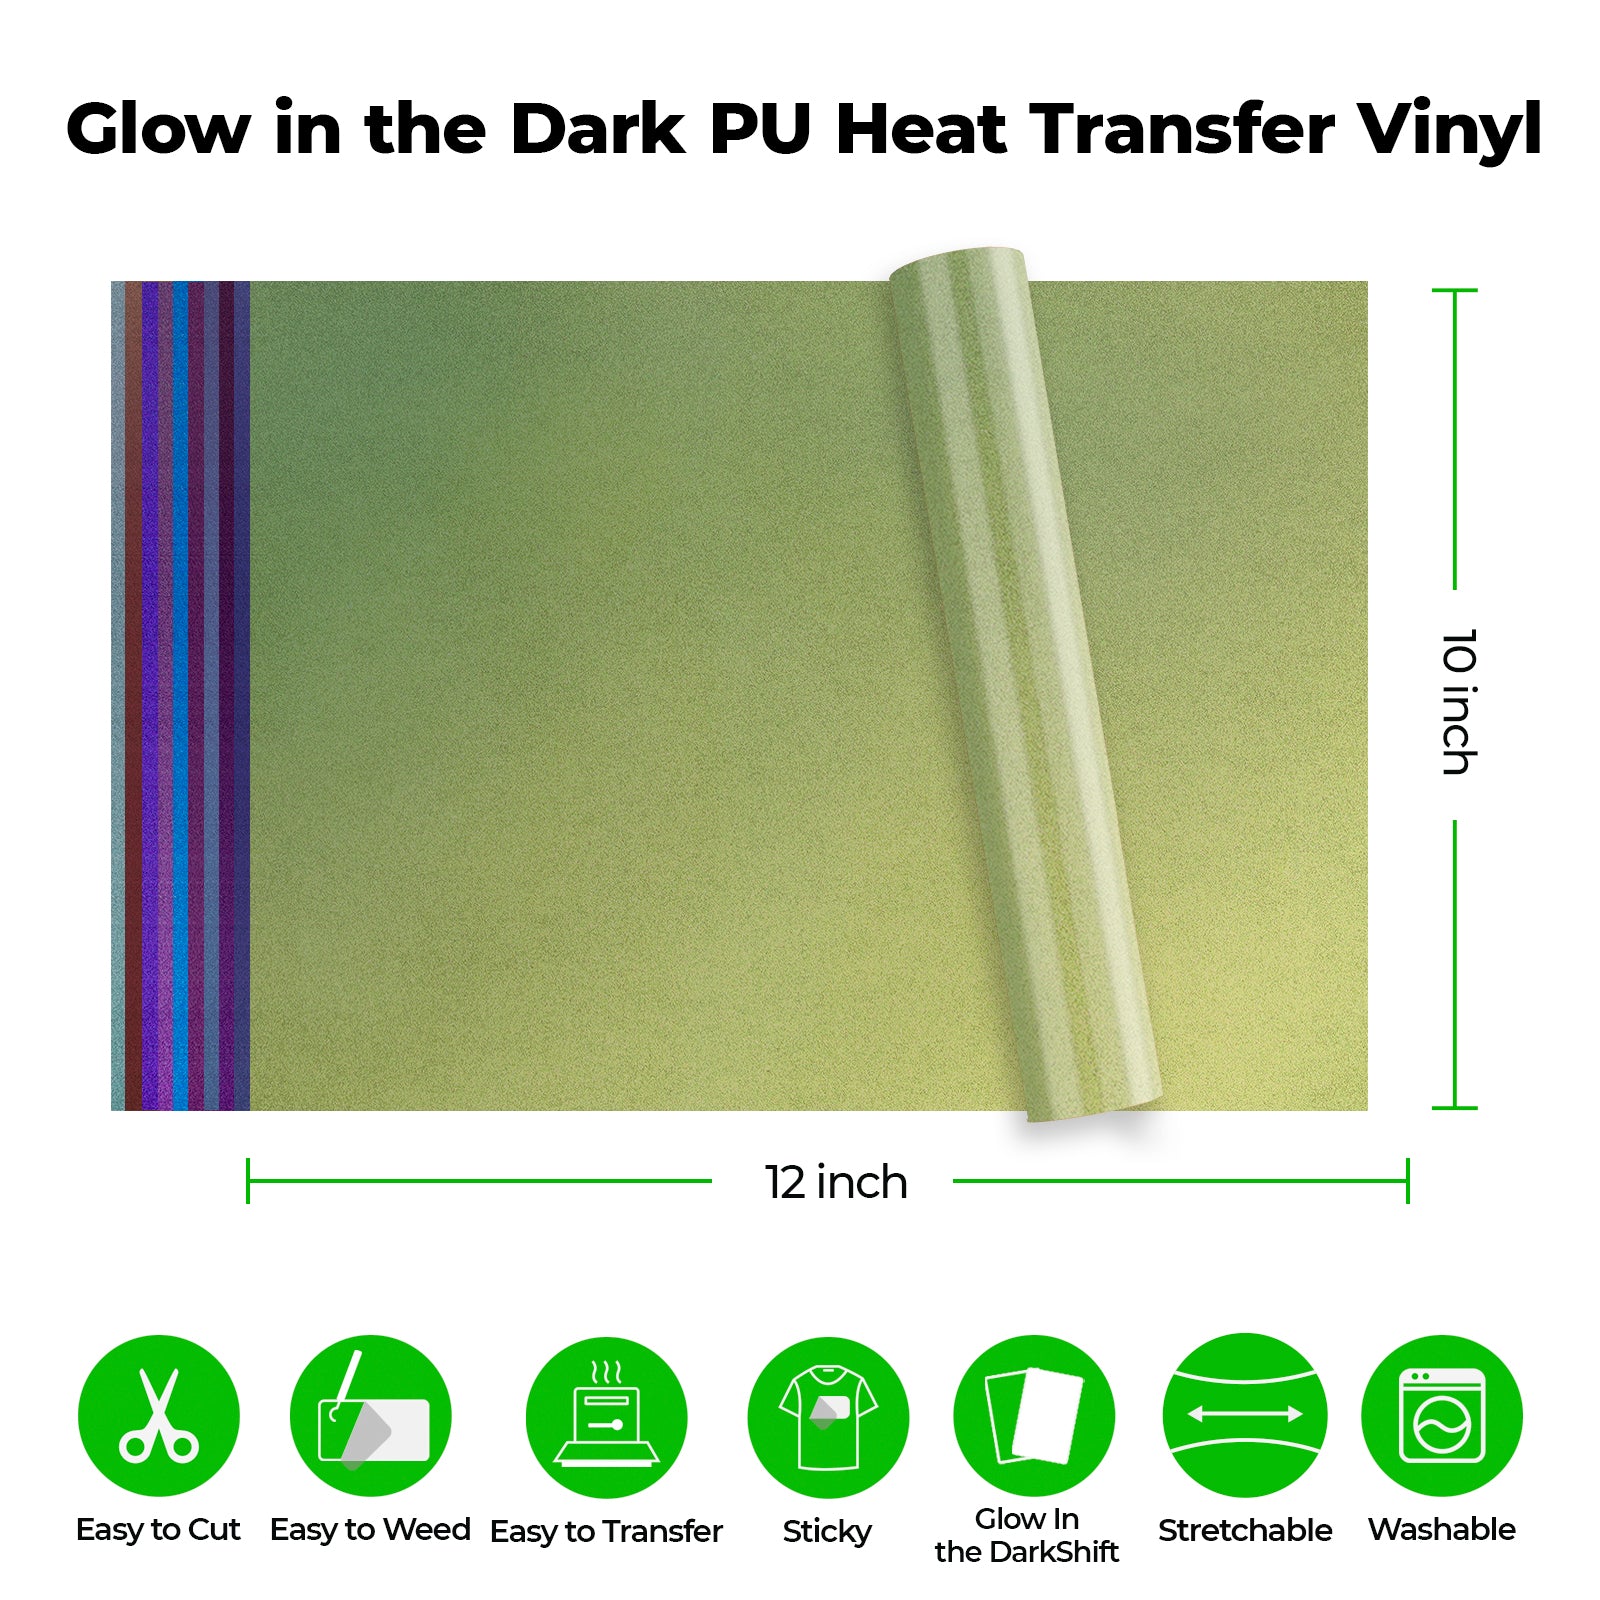 Chameleon PU Heat Transfer Vinyl